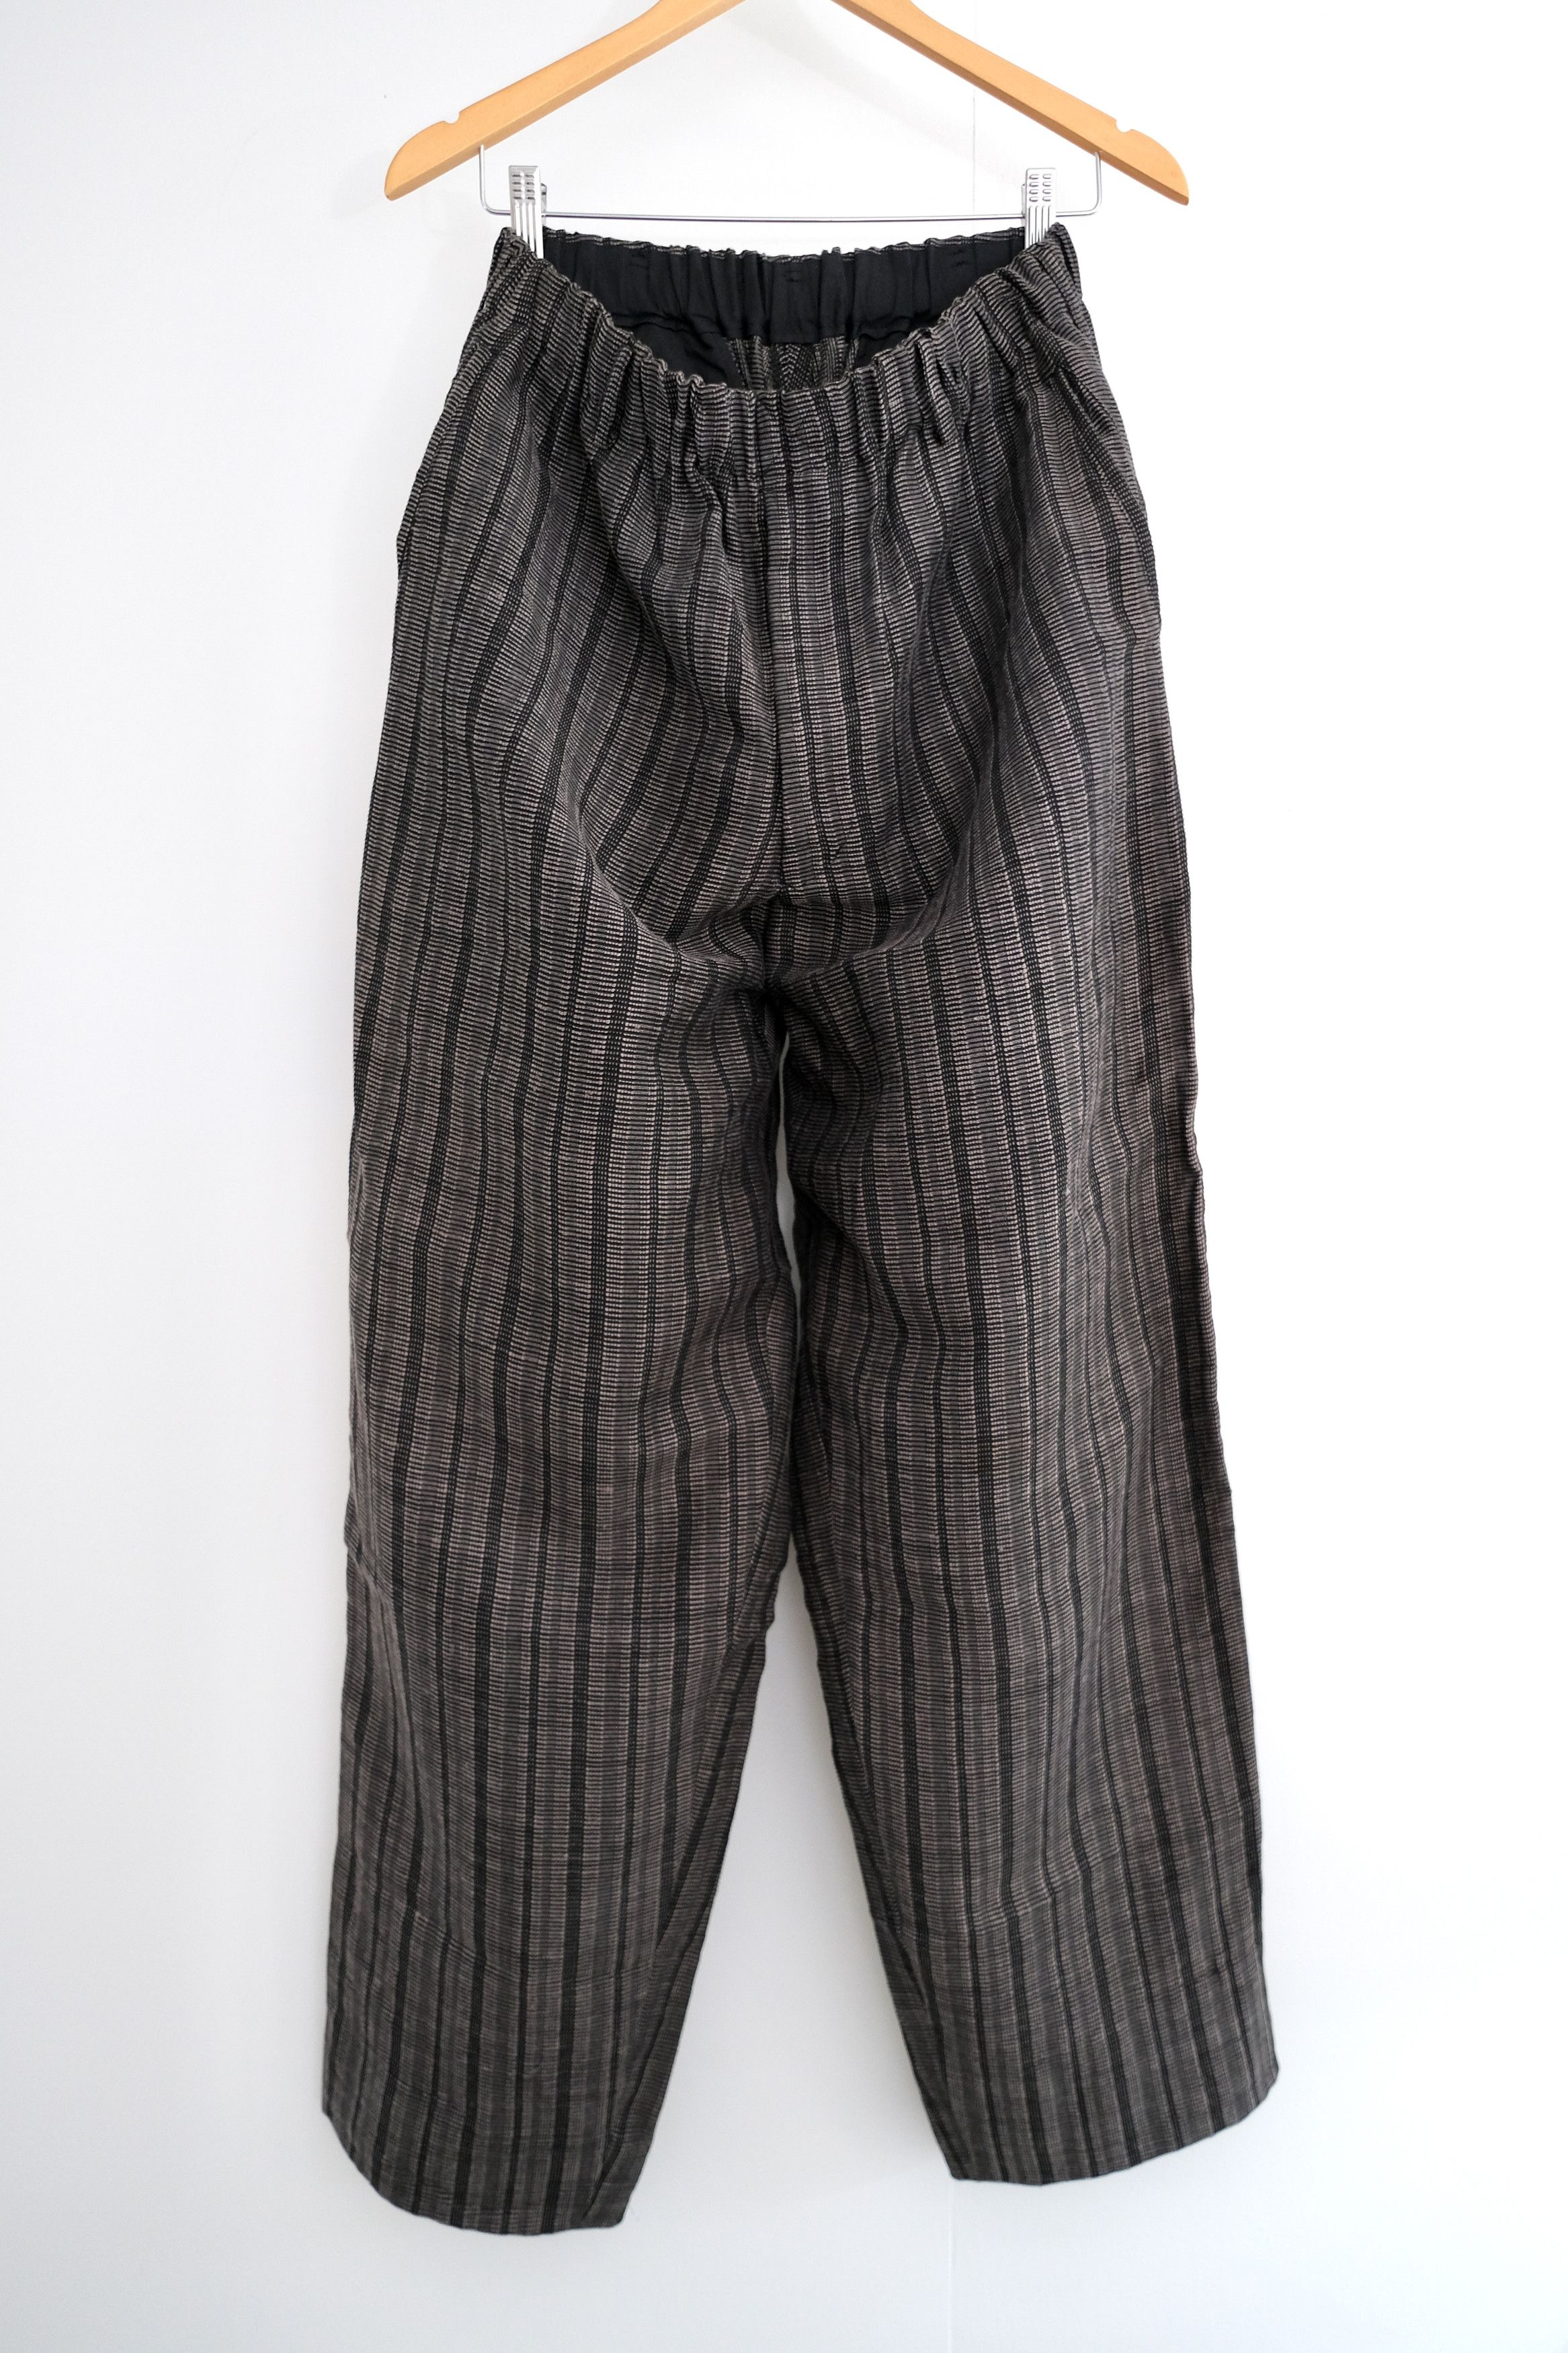 Yohji Yamamoto 1990s Linen-Blend Wide Pants | Grailed